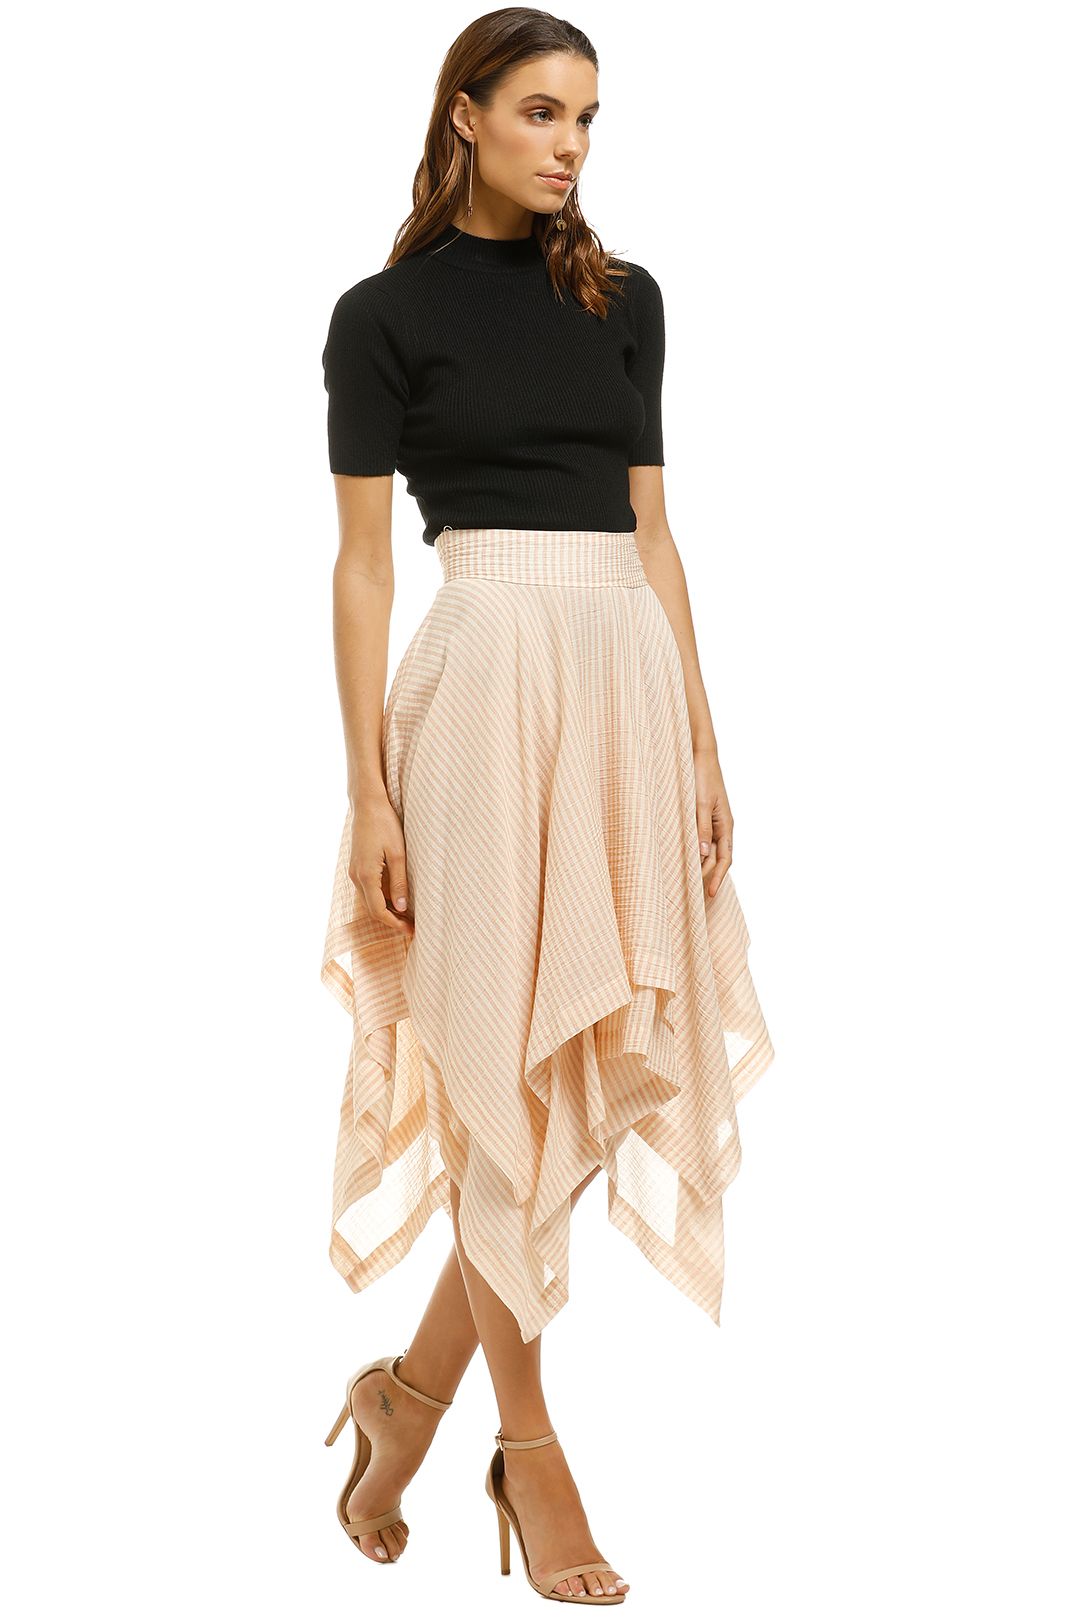 KITX - Noble Stripe Skirt - Beige - Side